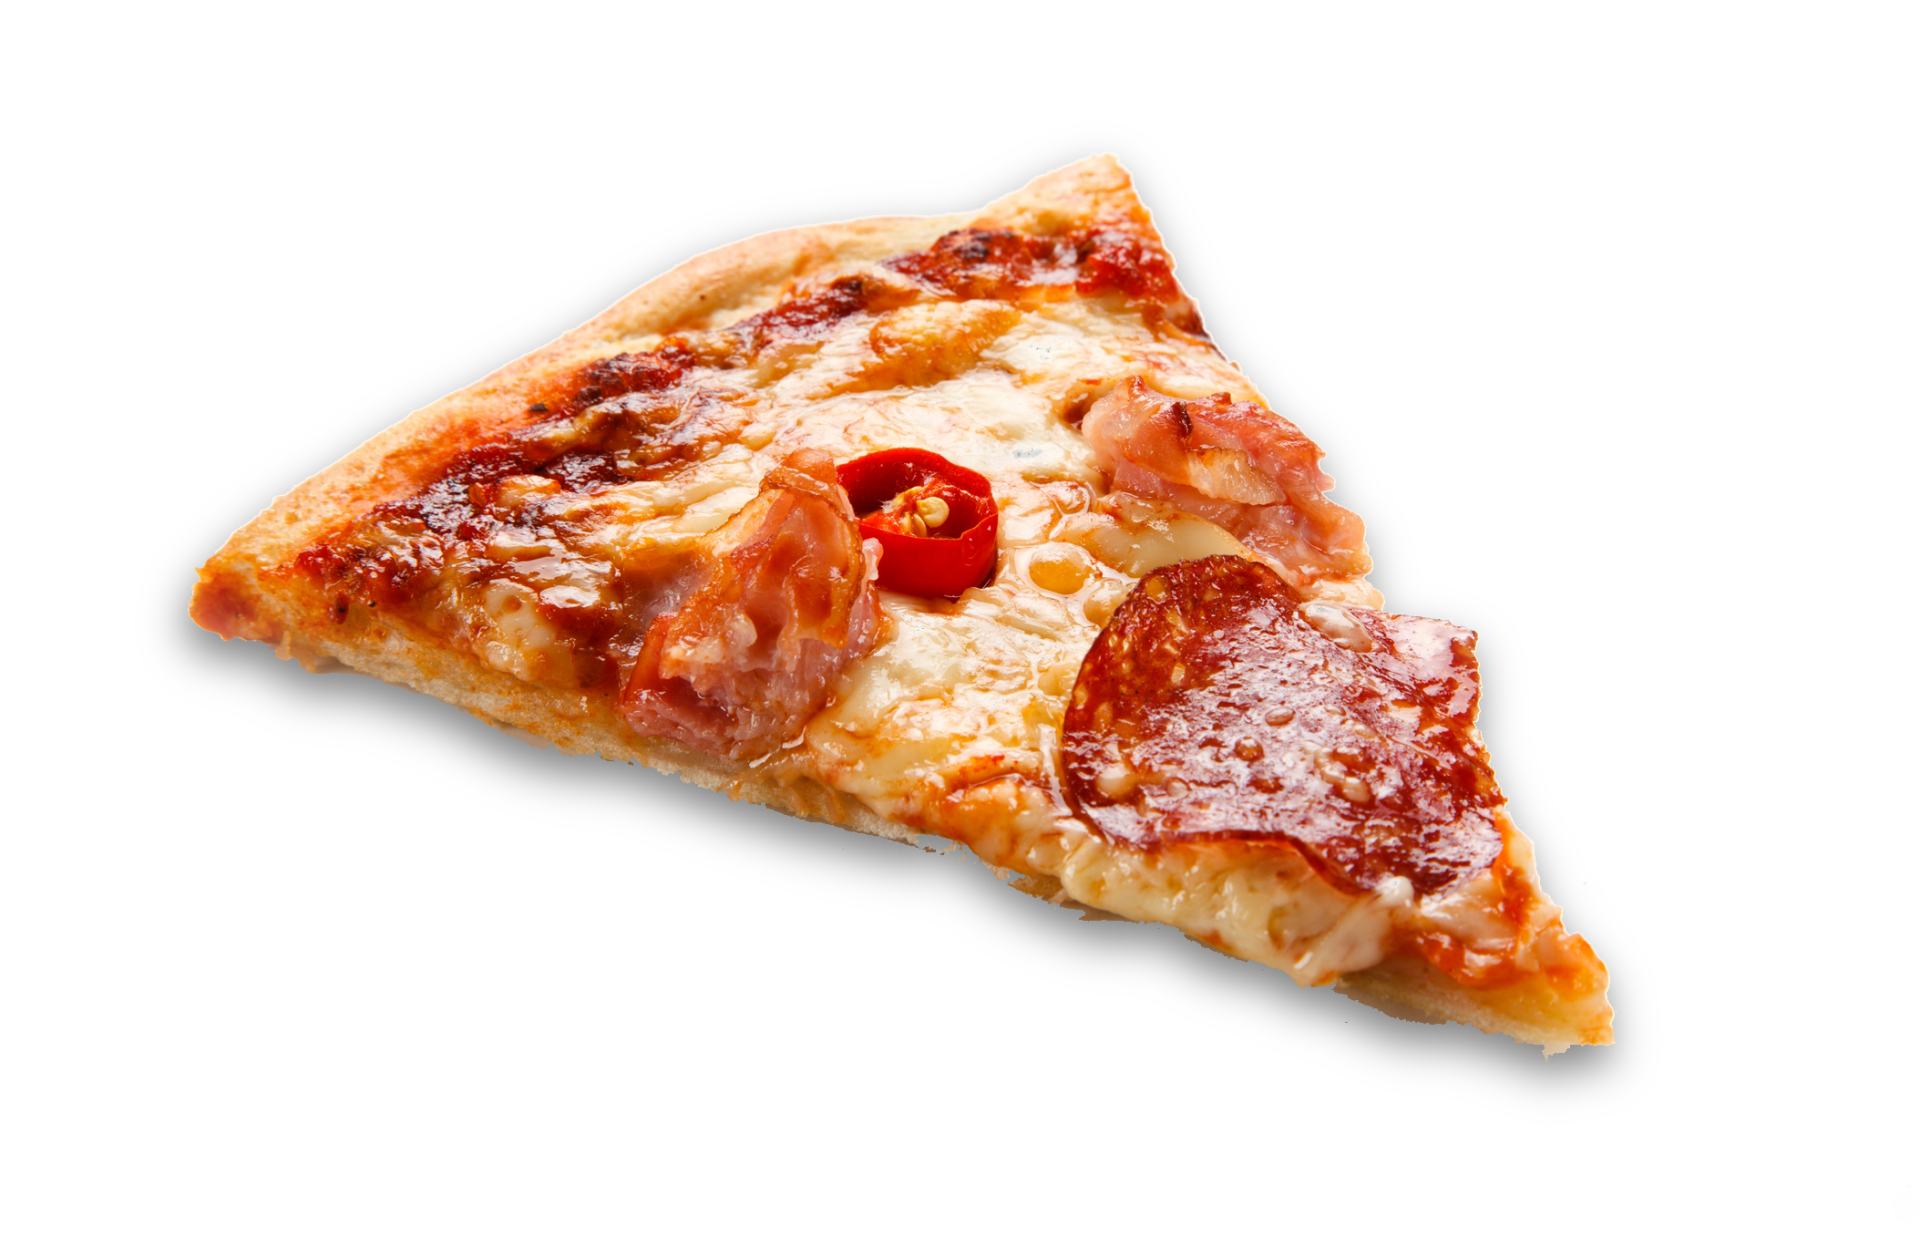 Italian Pizza — Slice Of A Pepperoni Pizza in Waterbury, CT